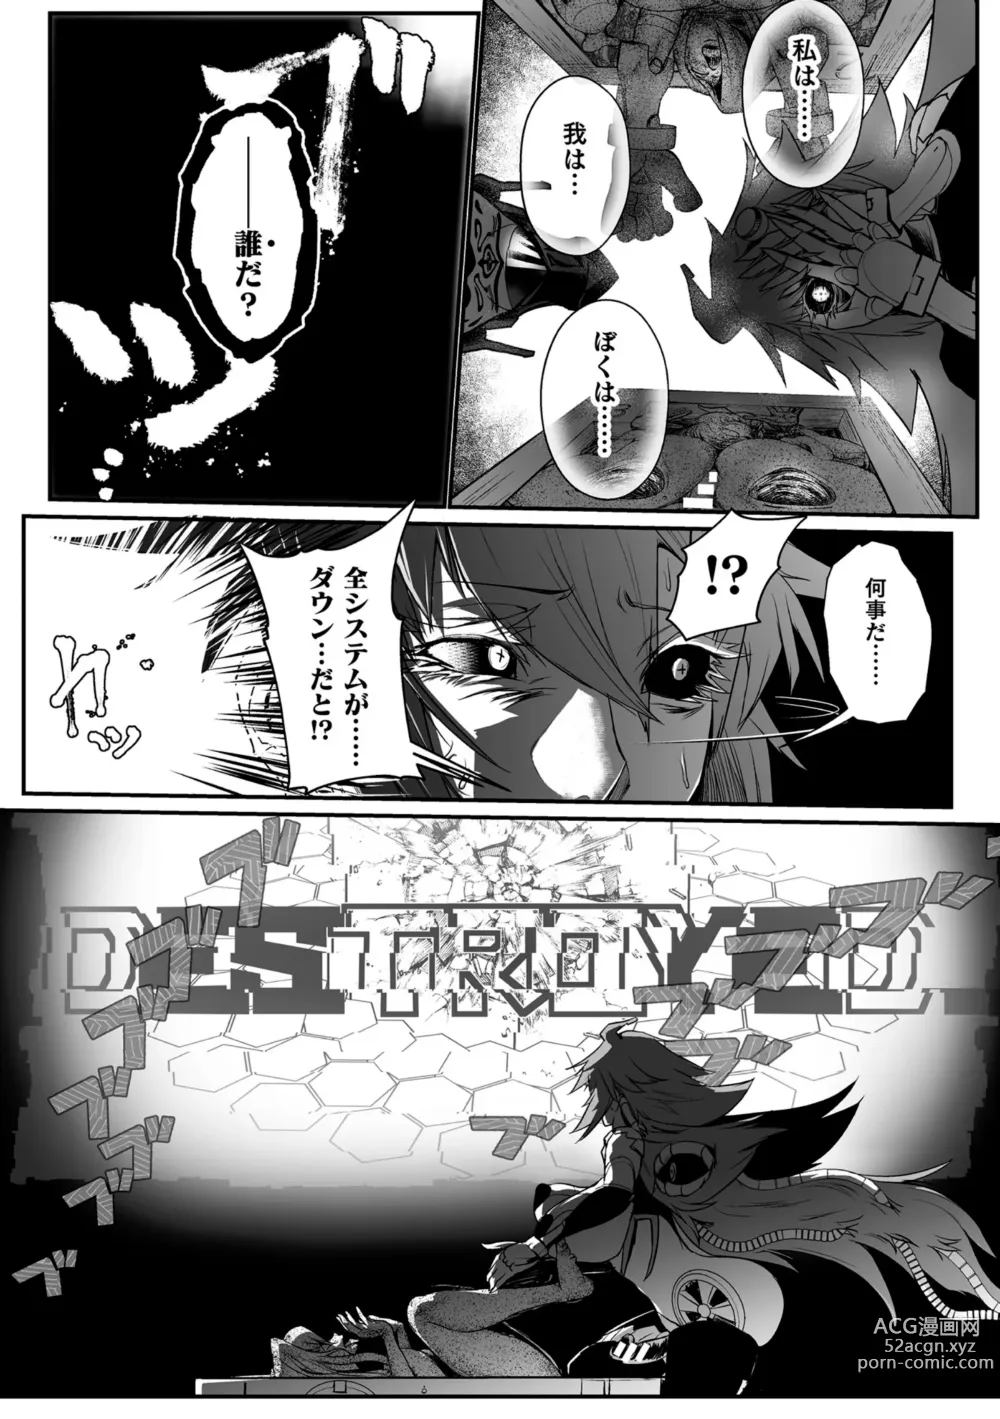 Page 28 of manga Carbonite Cocytus - Episode III